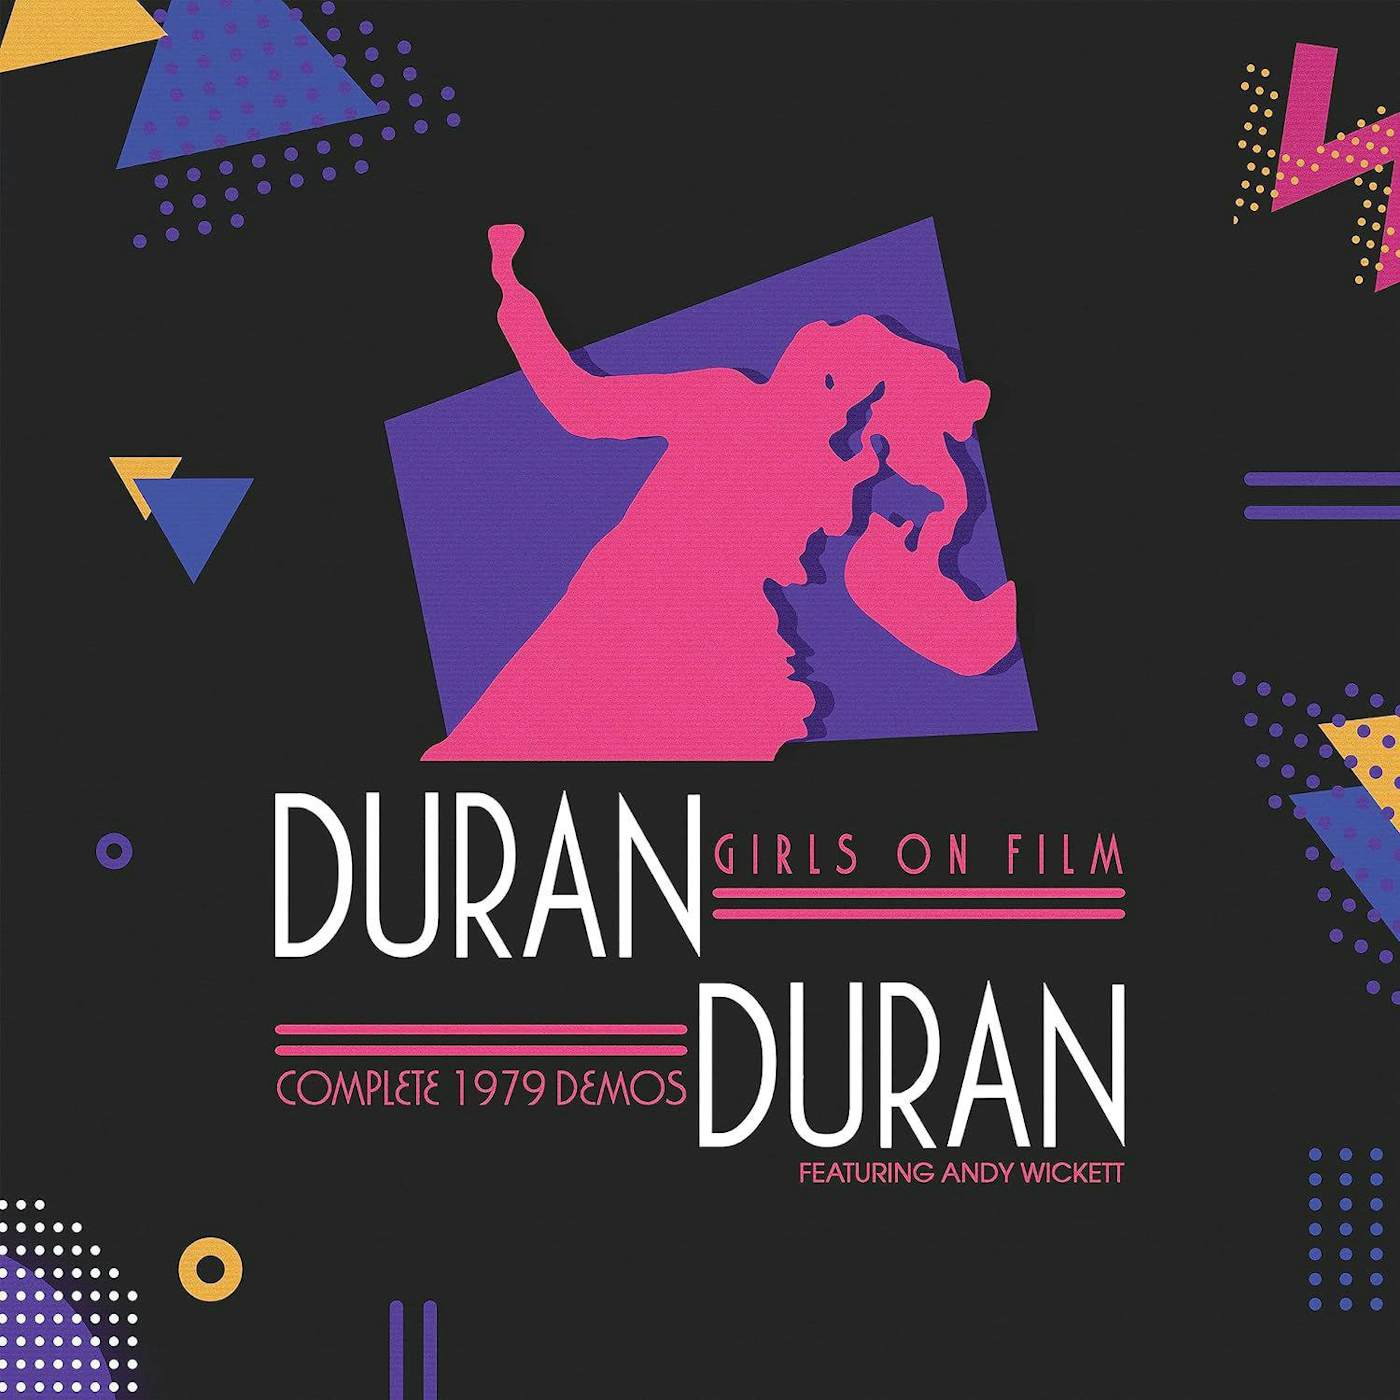 Duran Duran Girls On Film - Complete 1979 Demos (Blue W/ Pink Dots) Vinyl Record